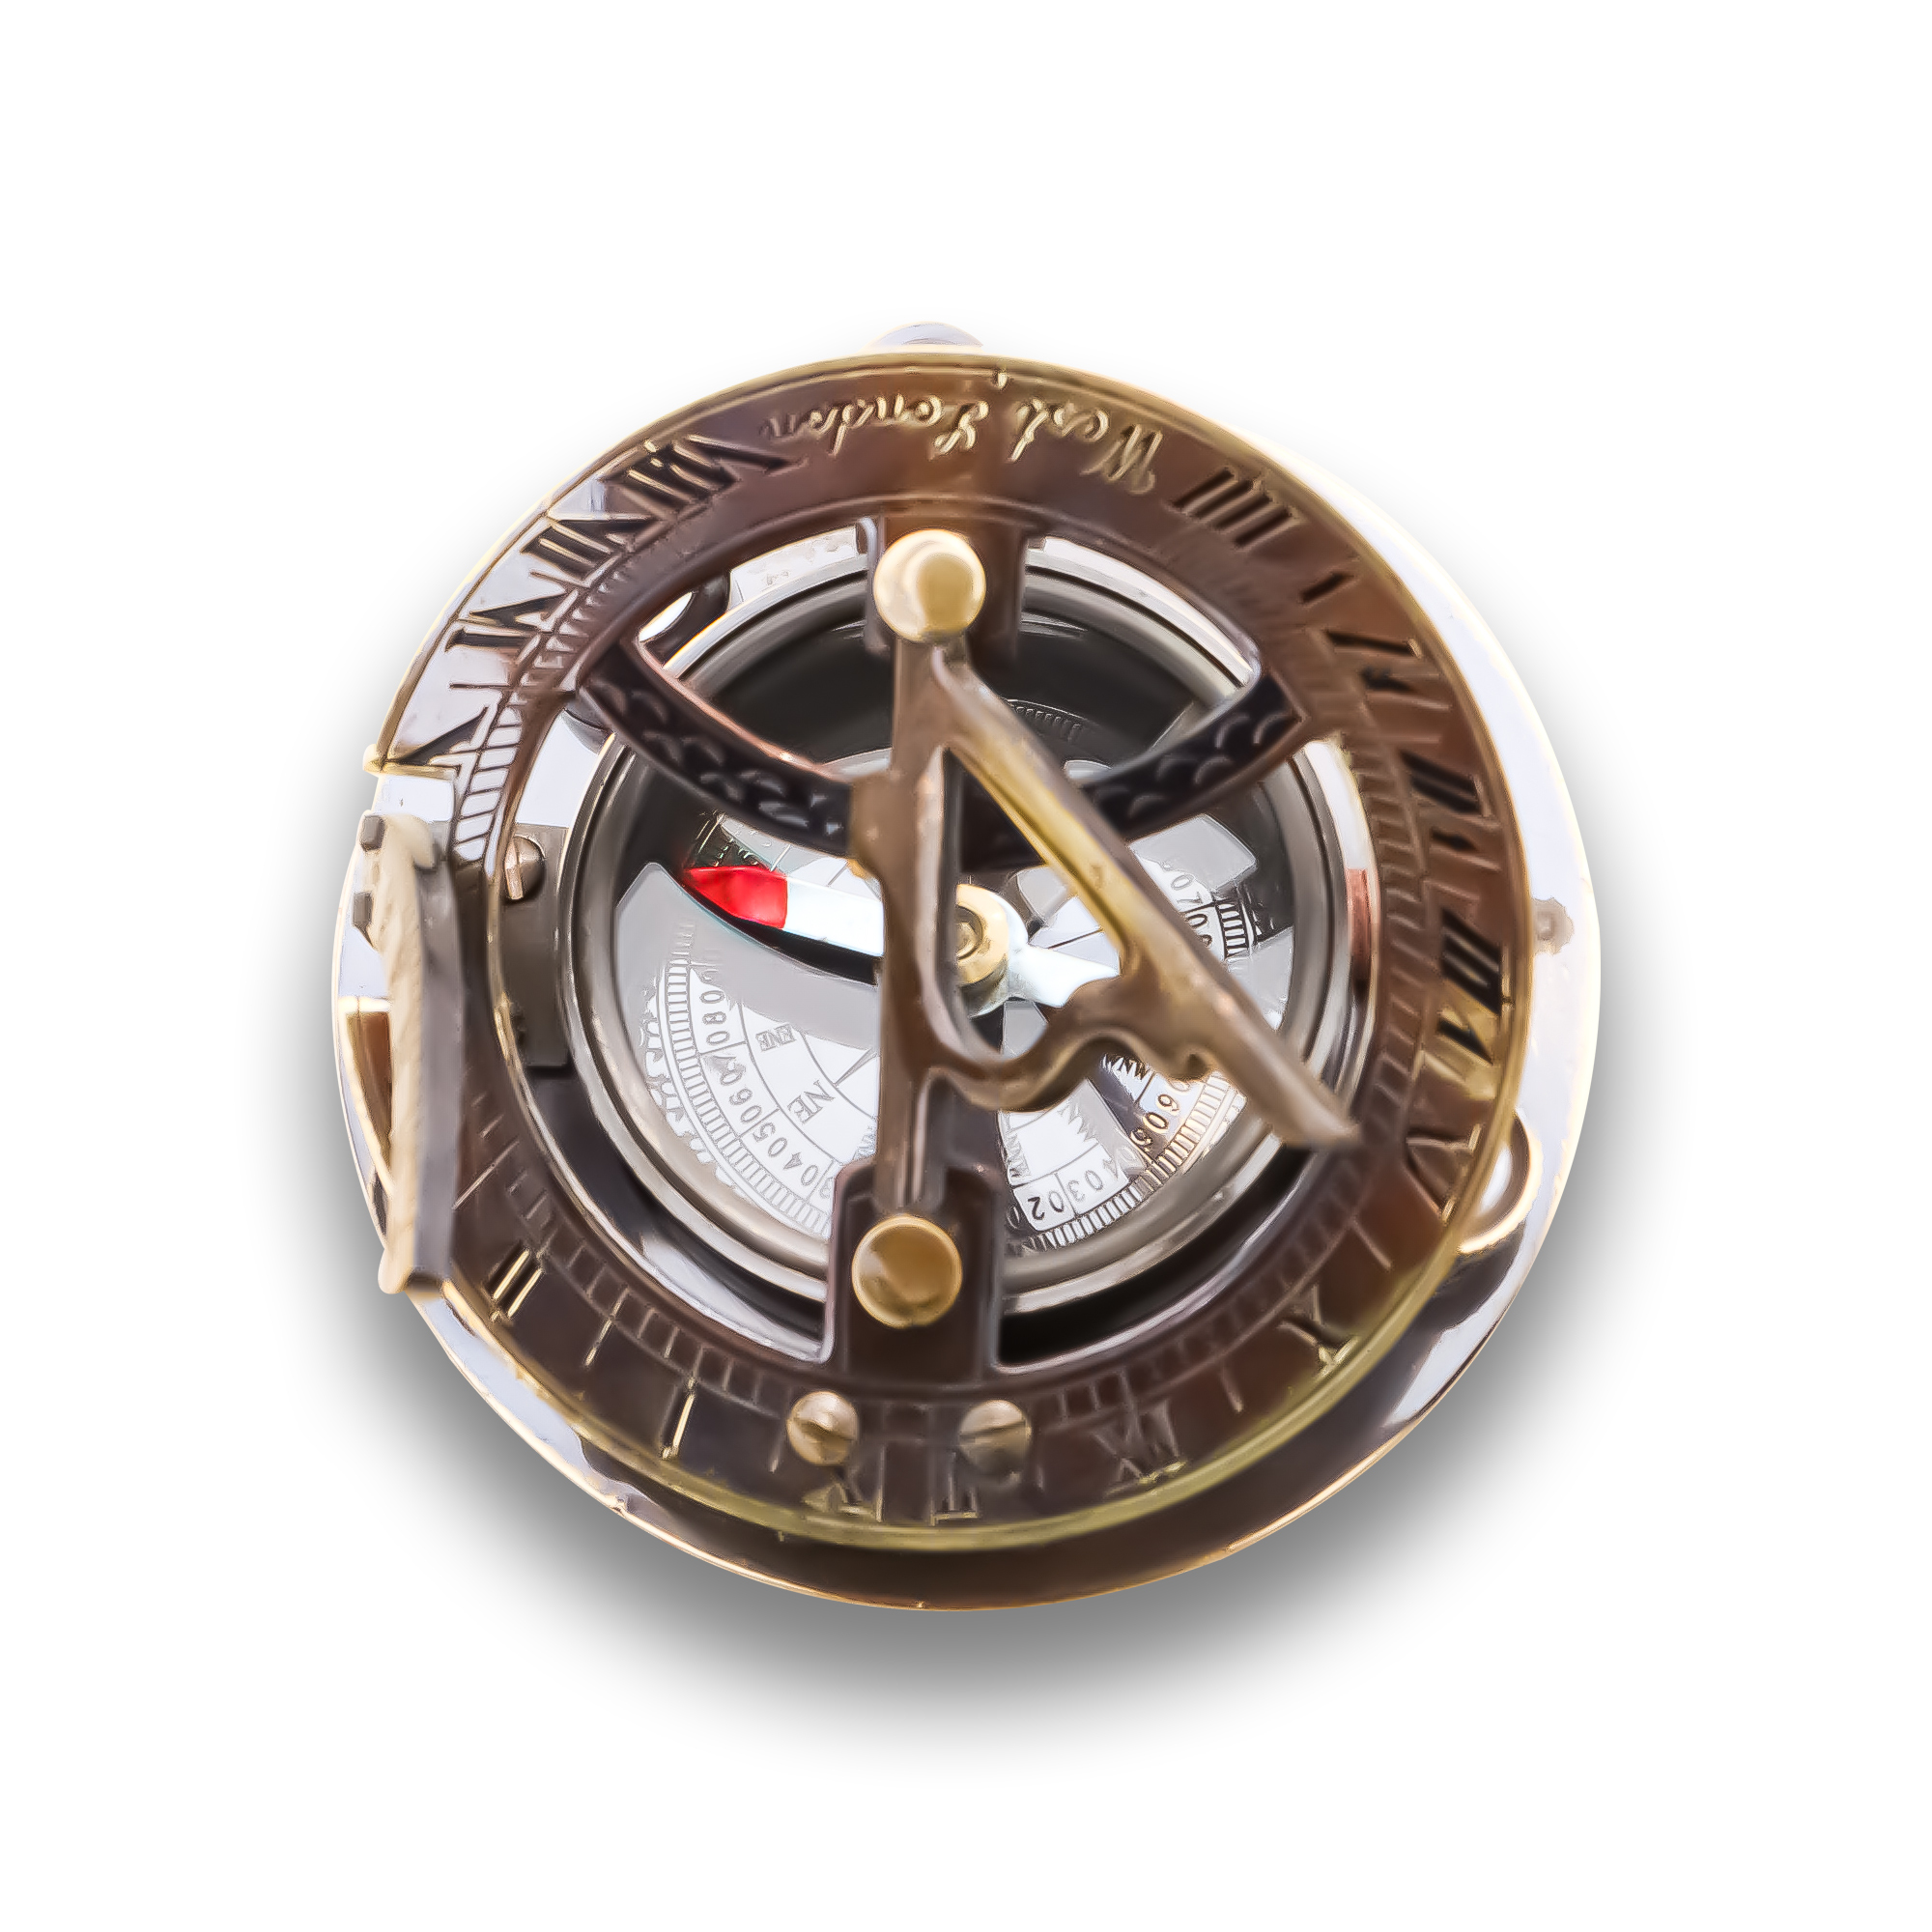 Antique Nautical Maritime Brass Push Button Pocket Sundial Compass